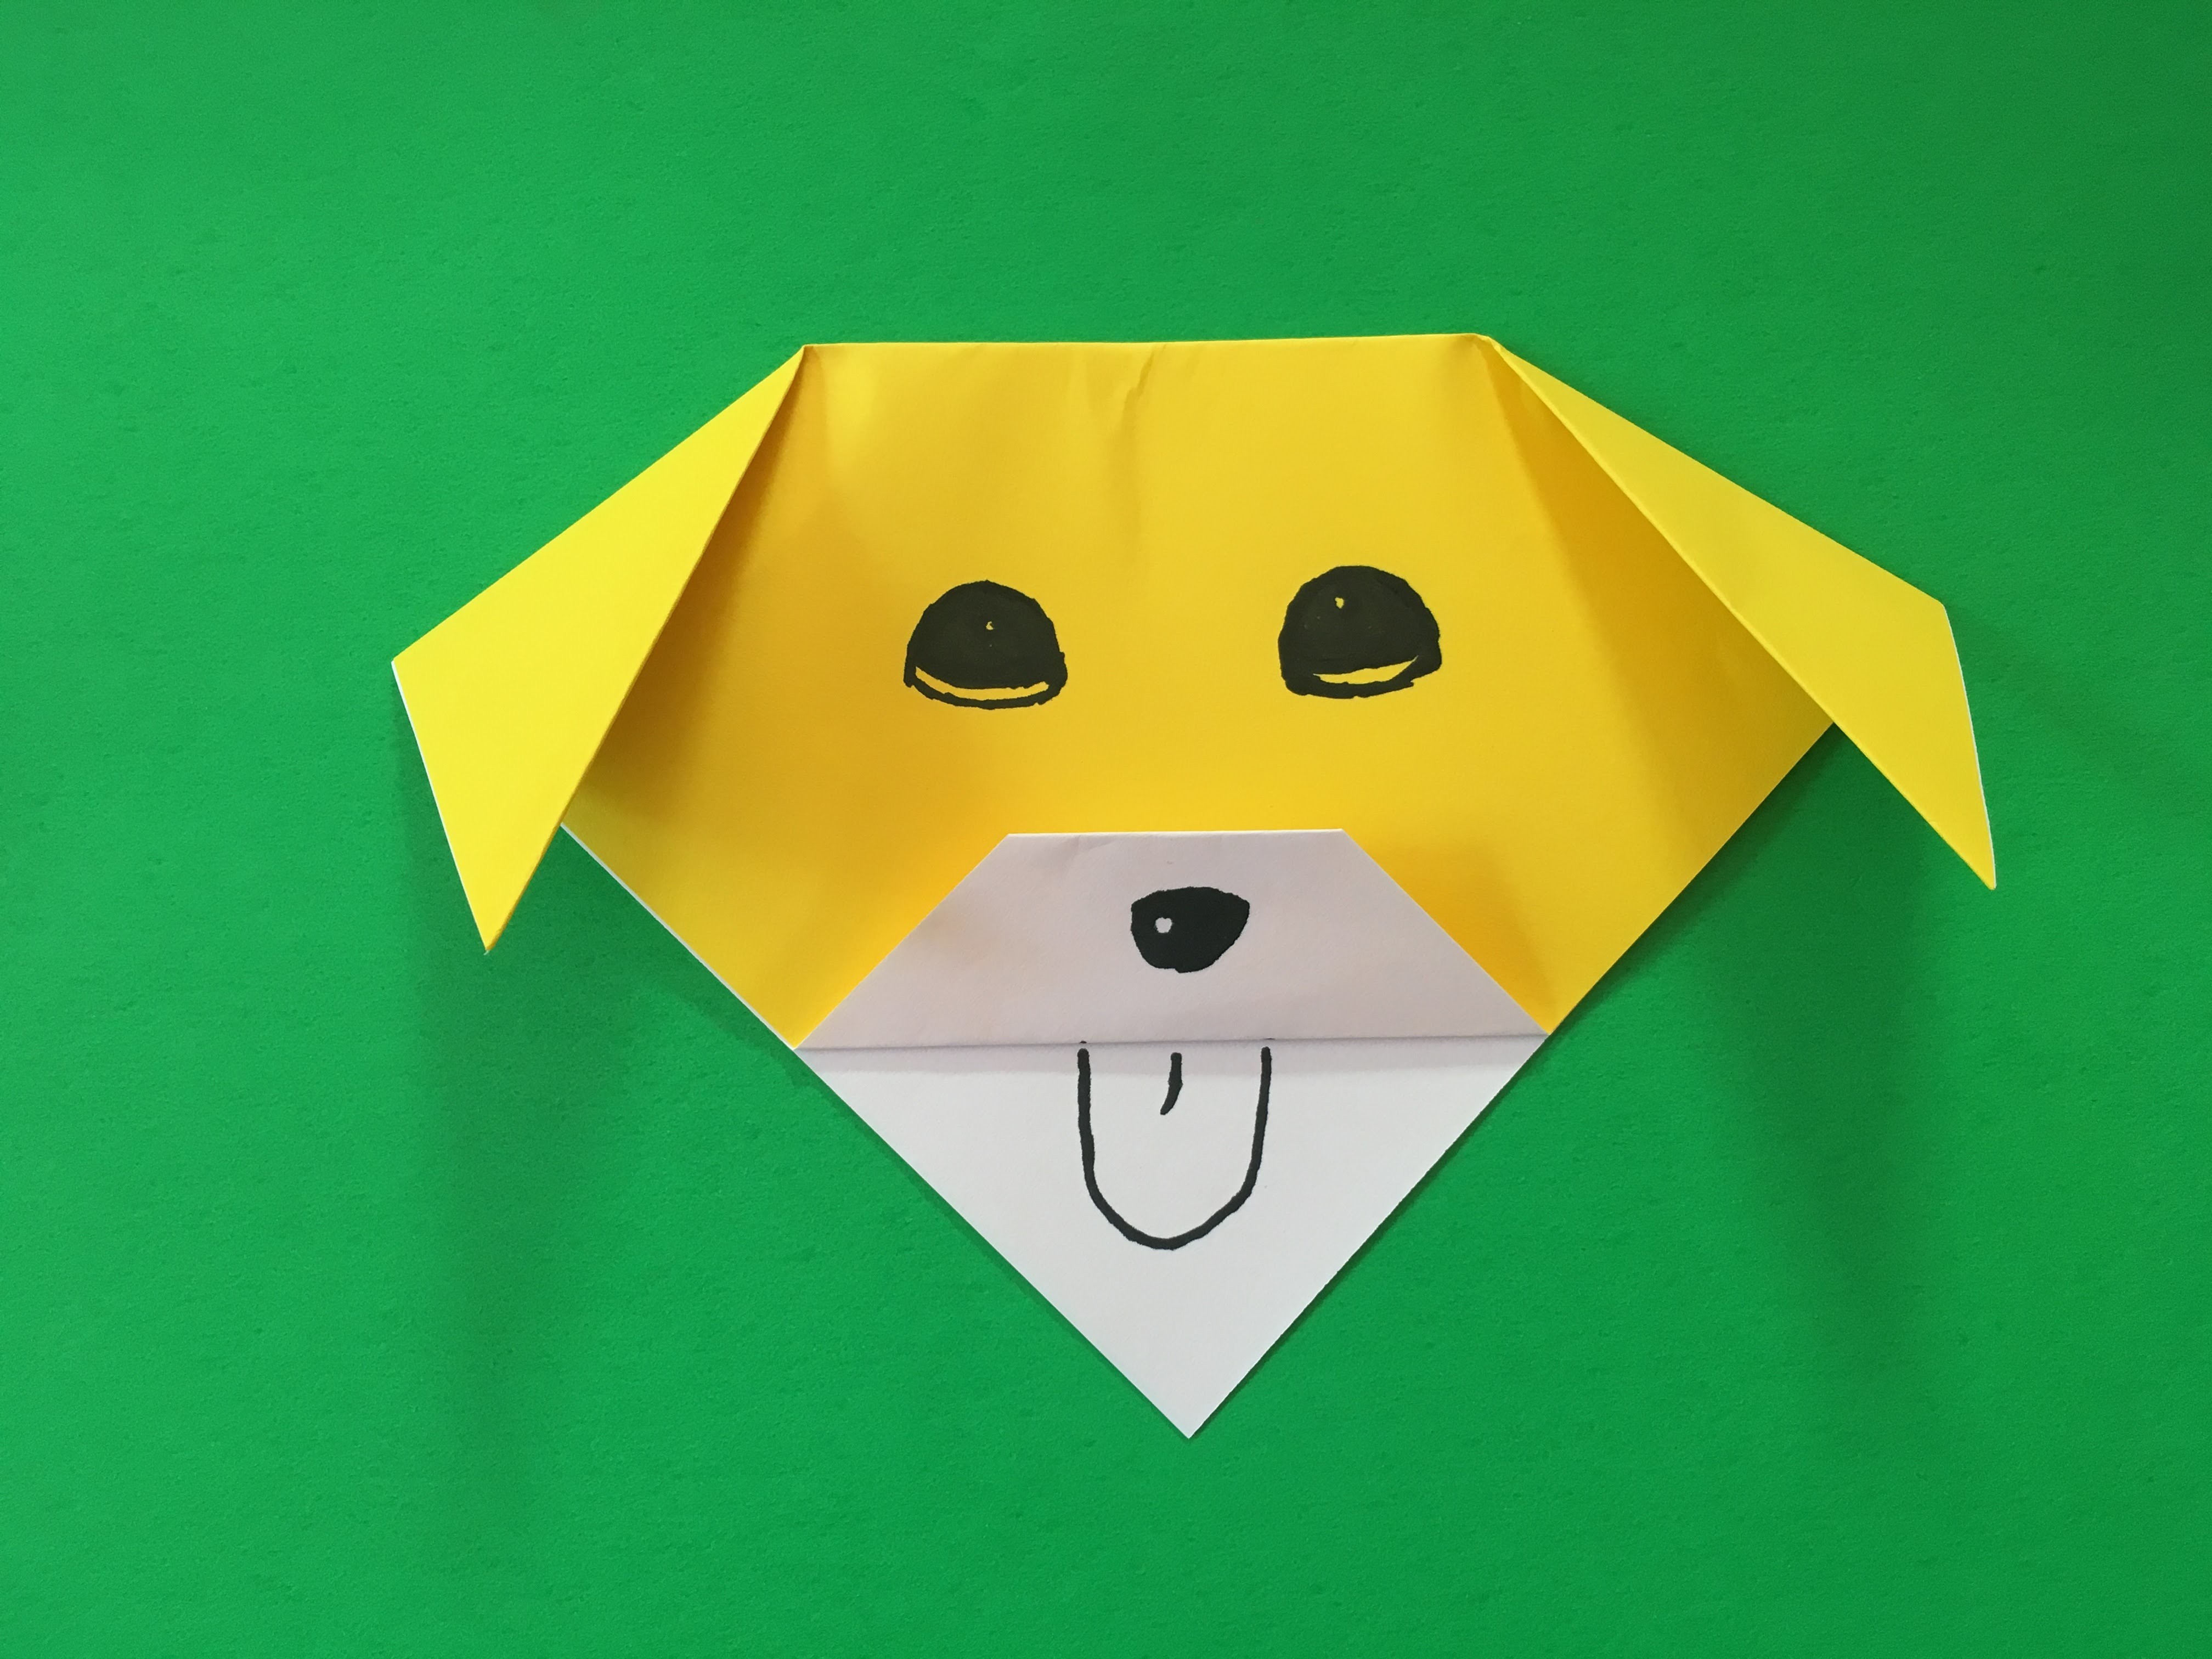 origami dog easy